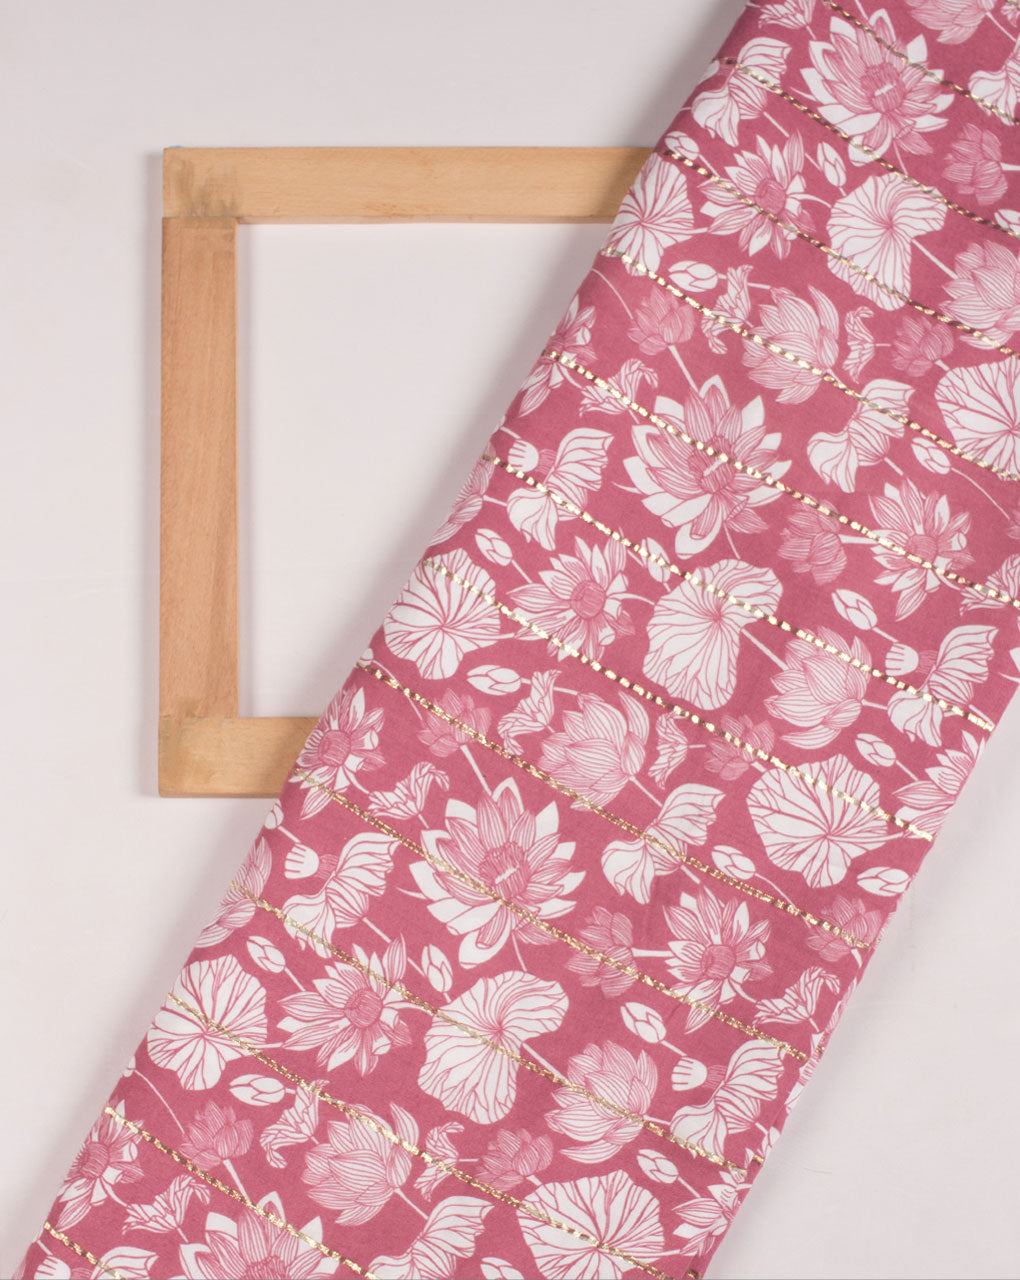 Floral Digital Print Lurex Rayon Fabric - Fabriclore.com